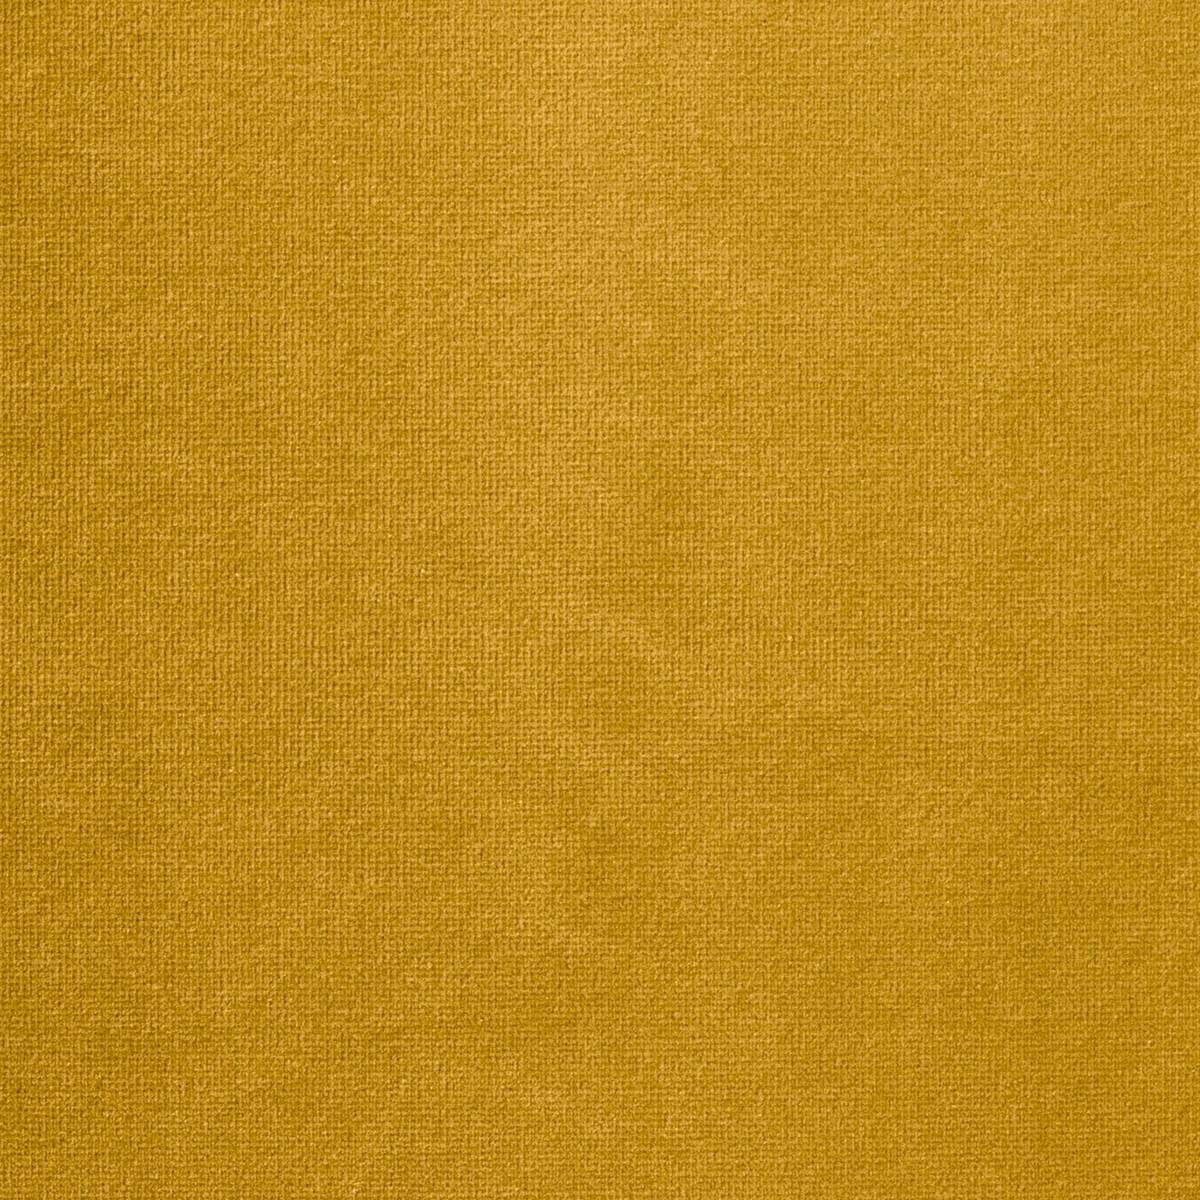 Темно желтый цвет. Желтый вельвет. Горчичный вельвет. Ткань горчичного цвета текстура. Желтый велюр.